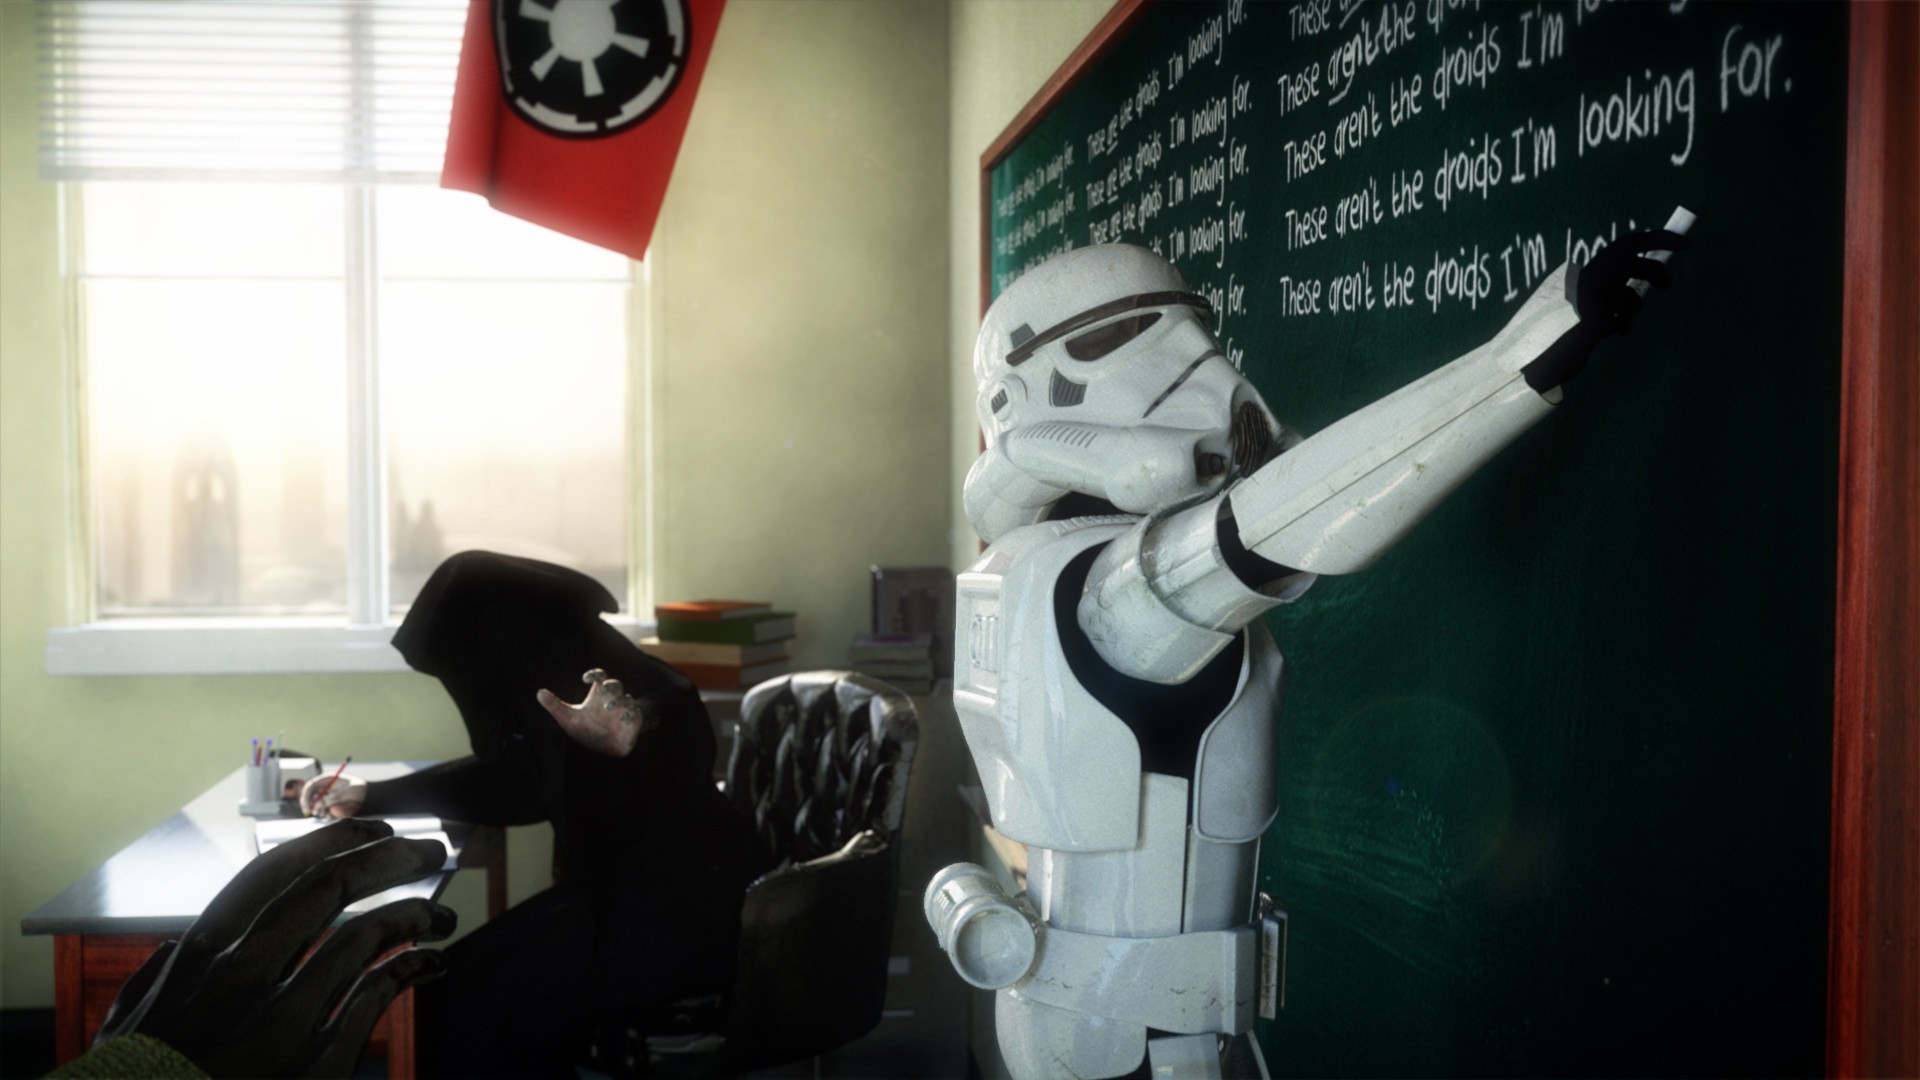 School Star Wars Stormtrooper 1920x1080